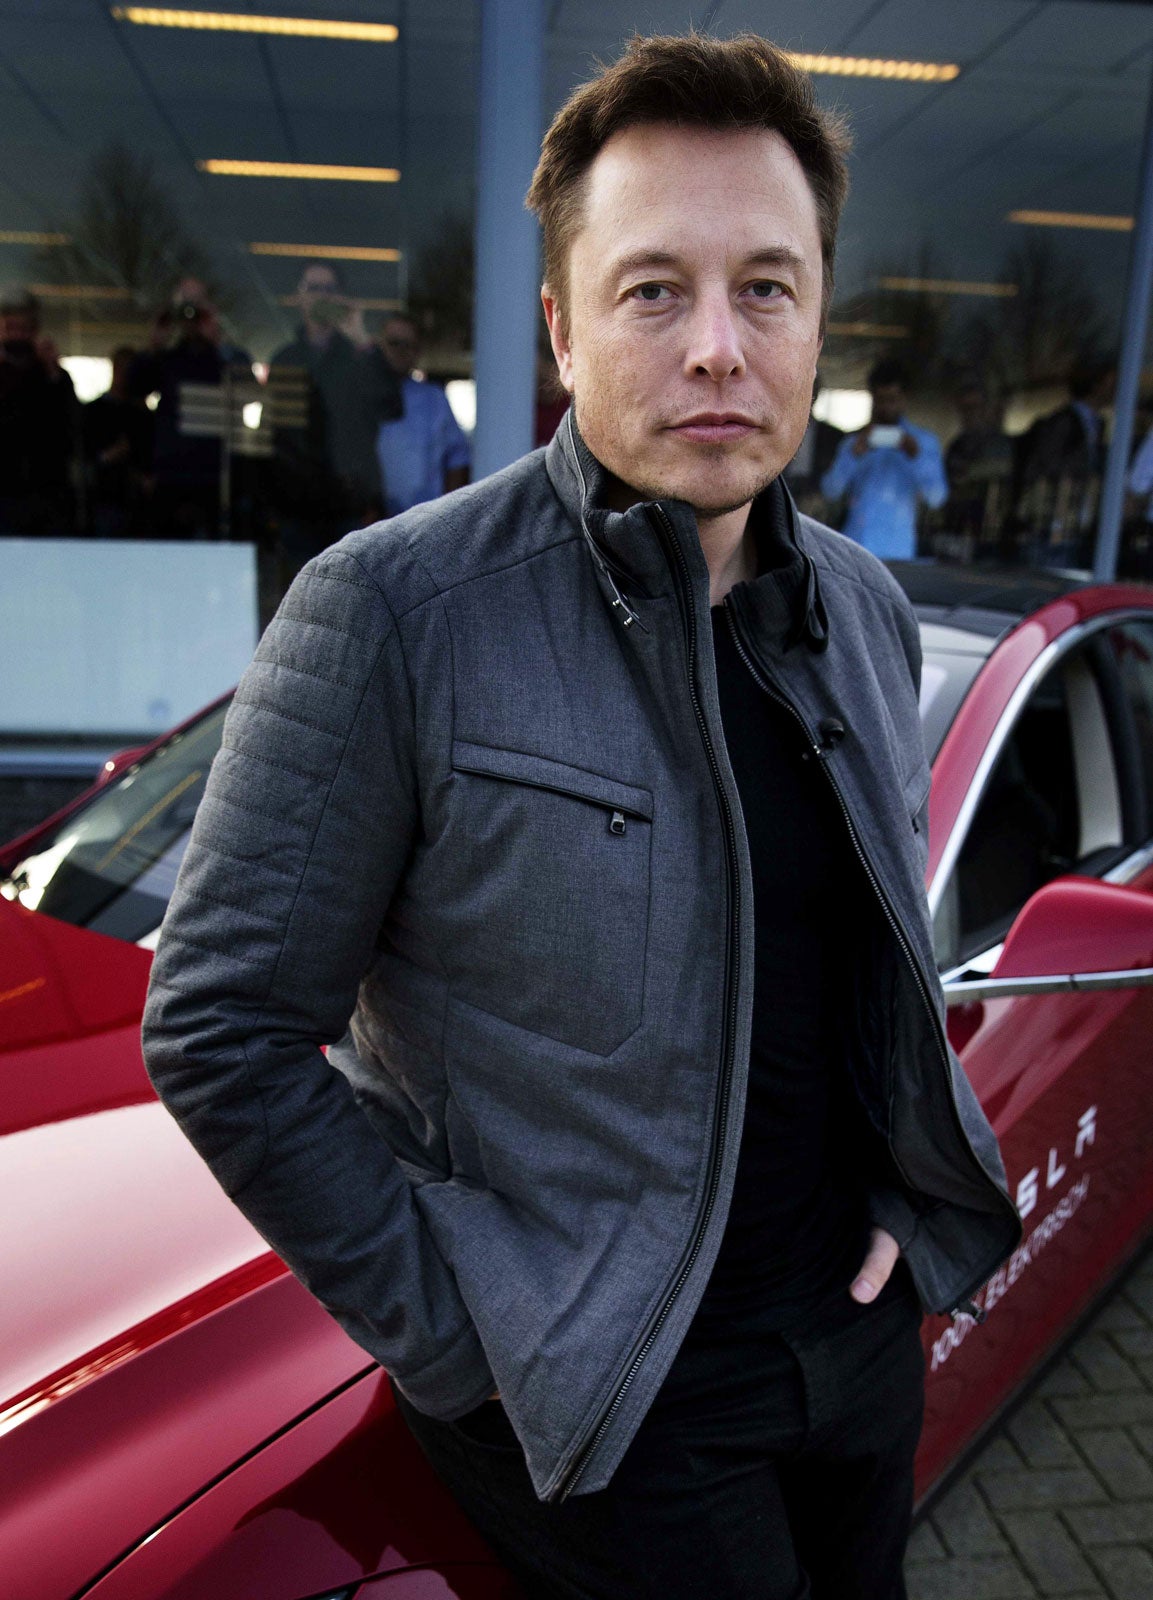 Telsa CEO Elon Musk 2014